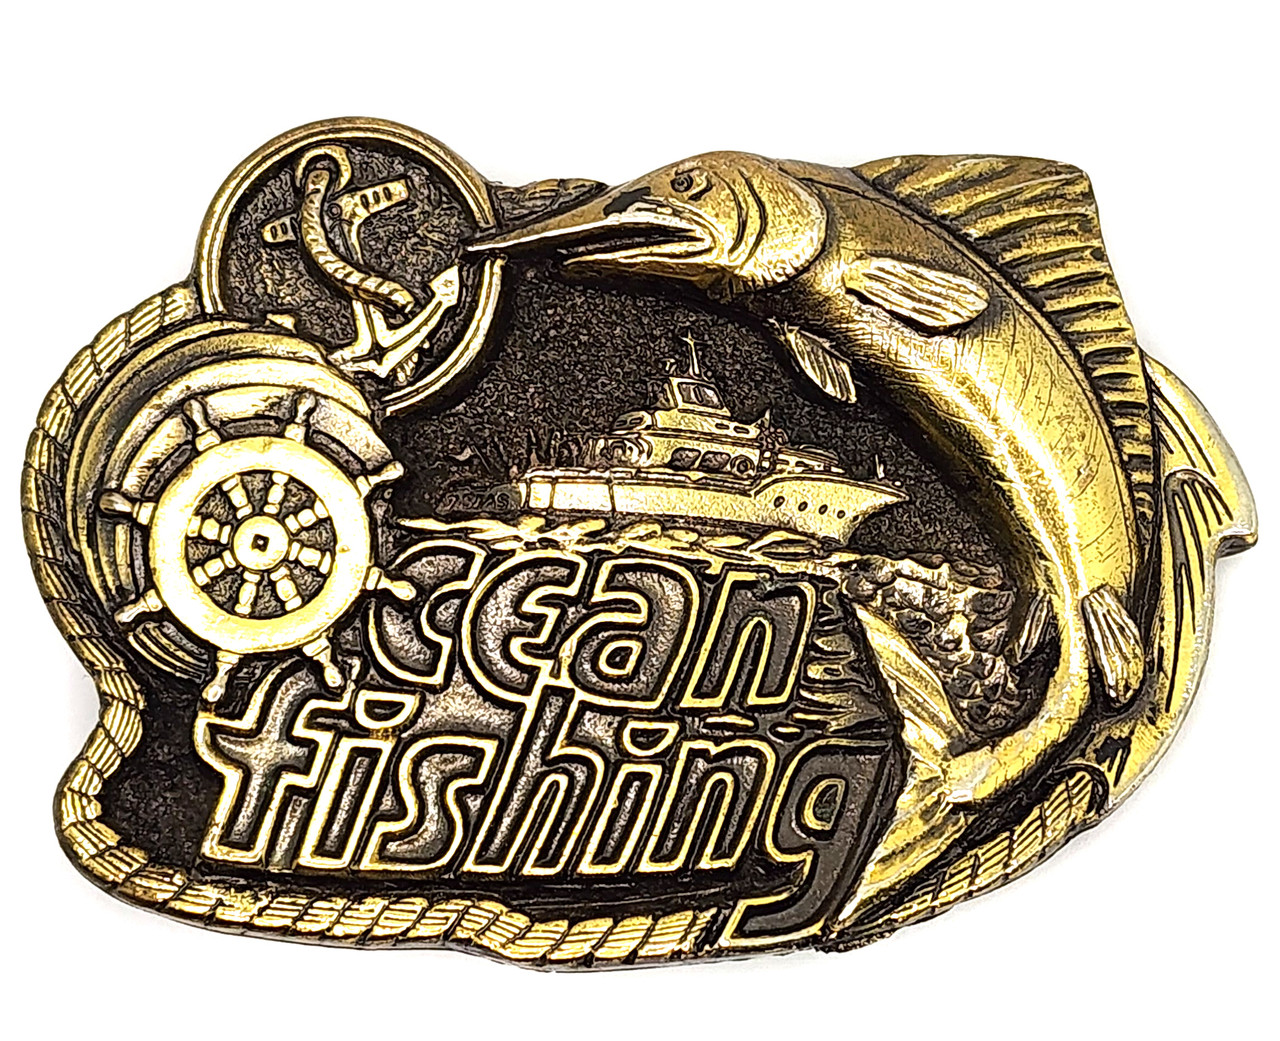 1982 Vintage Great American Buckle Company Ocean Fishing Belt Buckle Marlin  Fish - Before Times Shop